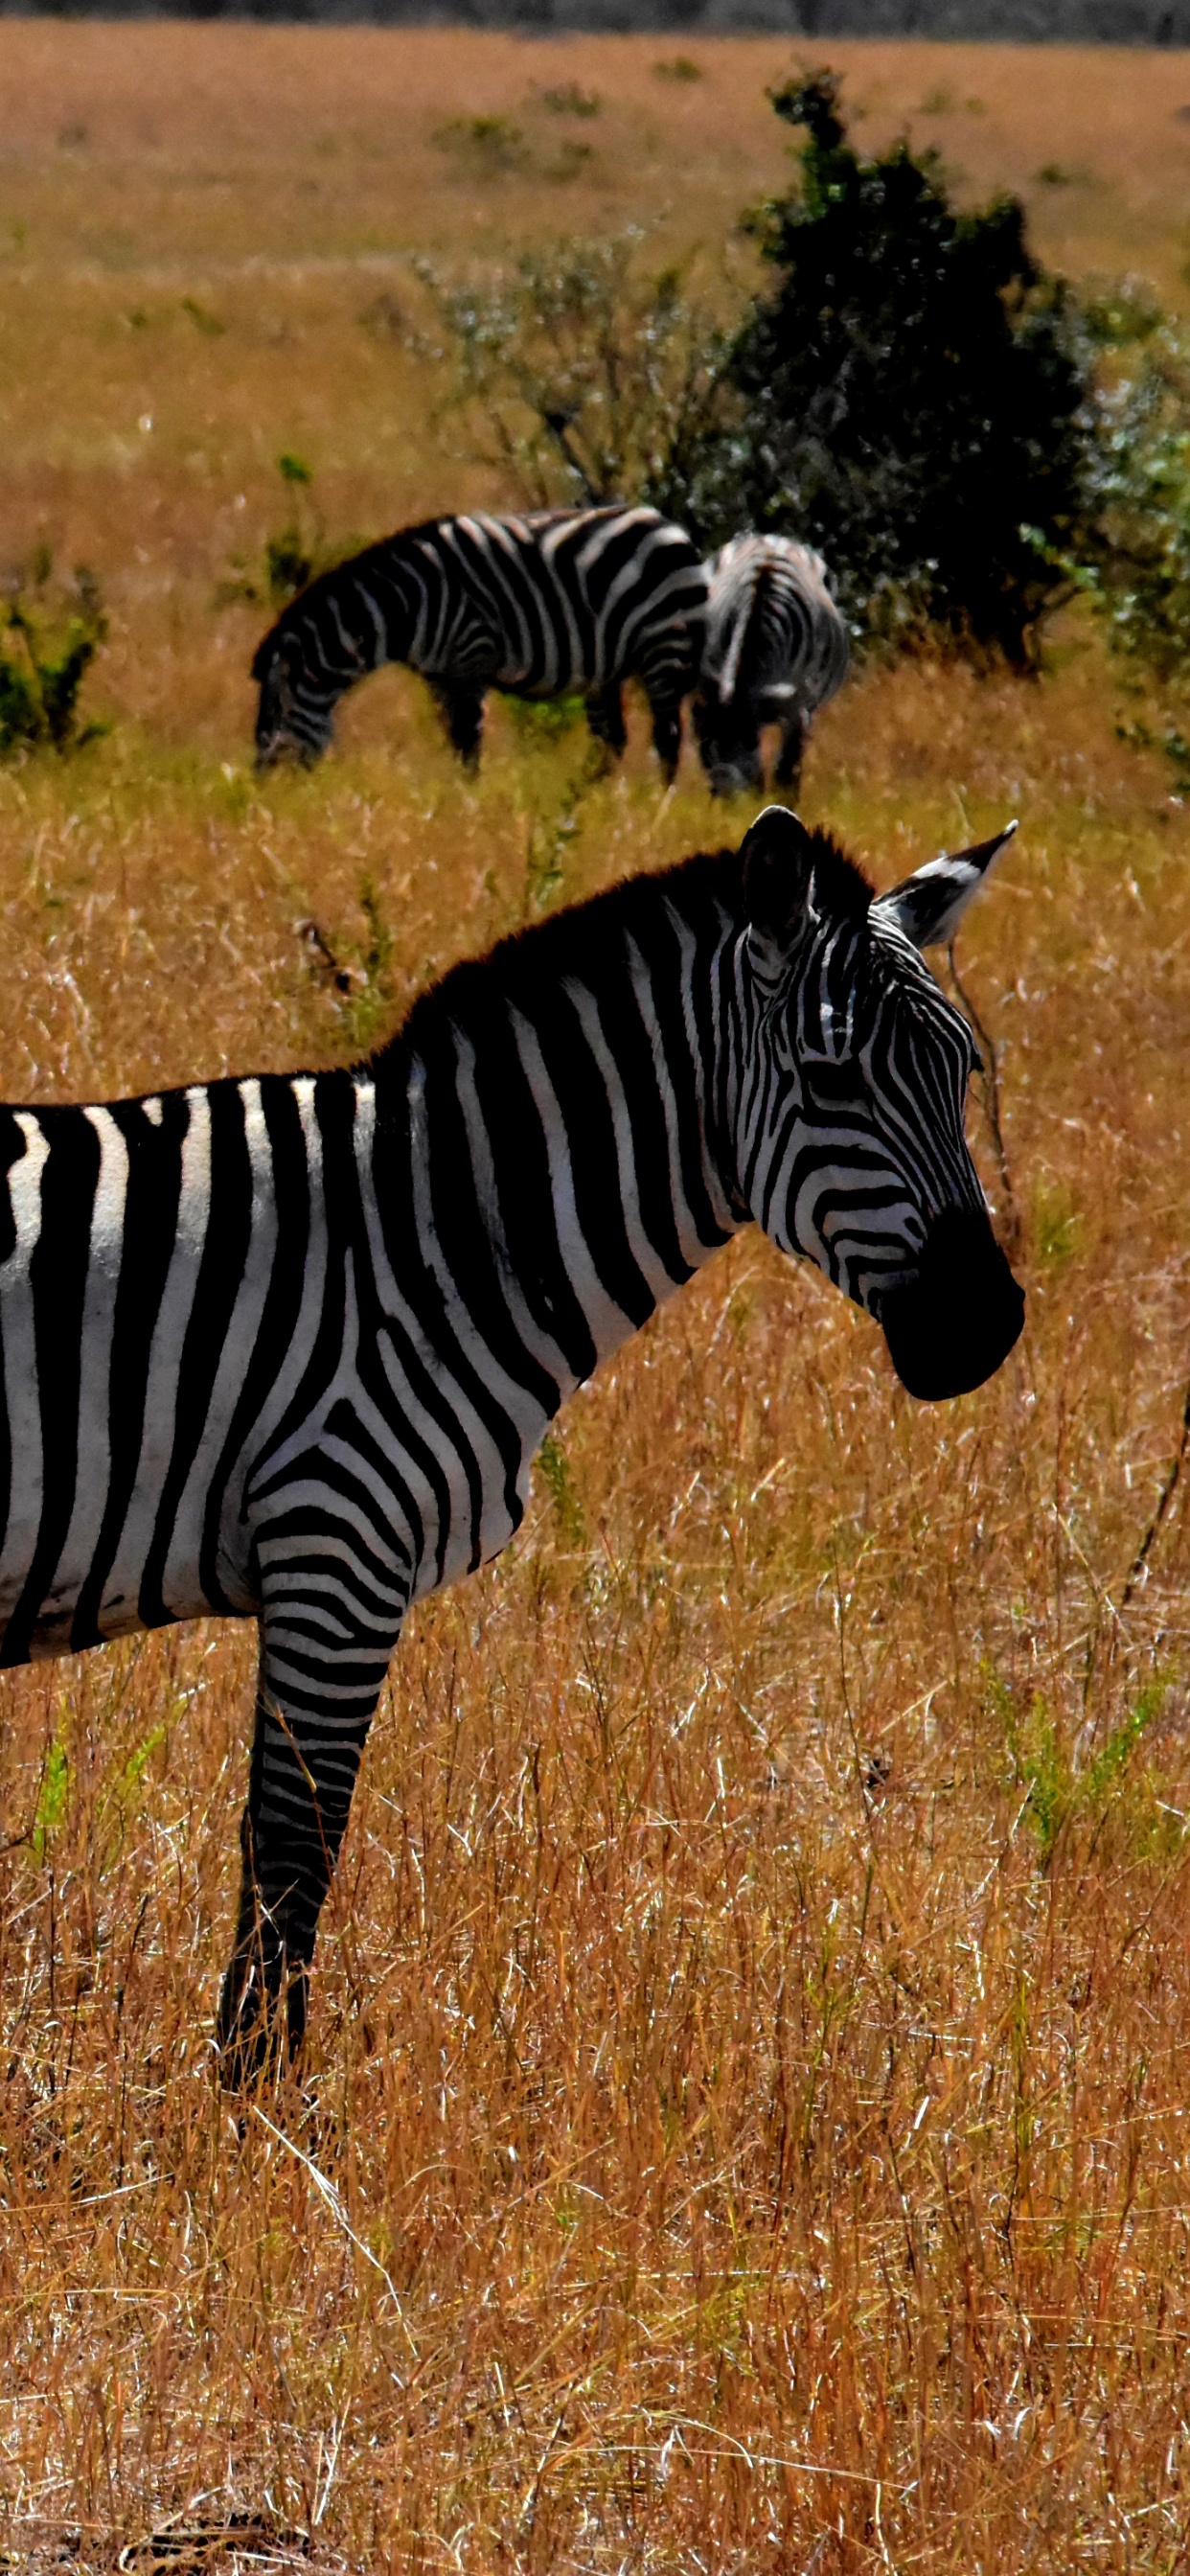 Zebra on Brown Grass Field During Daytime. Wallpaper in 1242x2688 Resolution